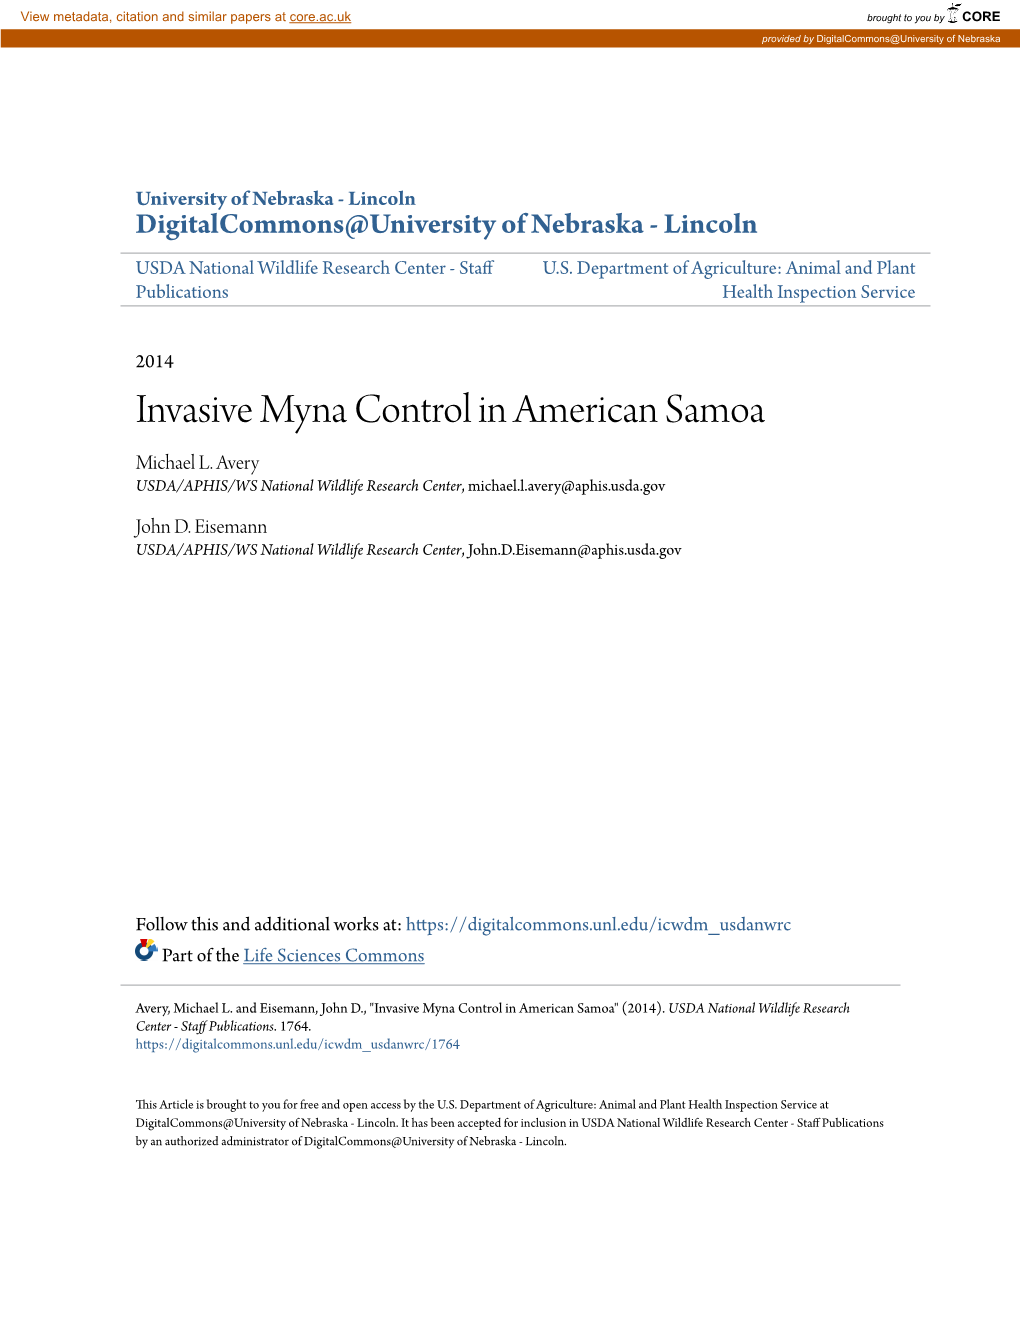 Invasive Myna Control in American Samoa Michael L